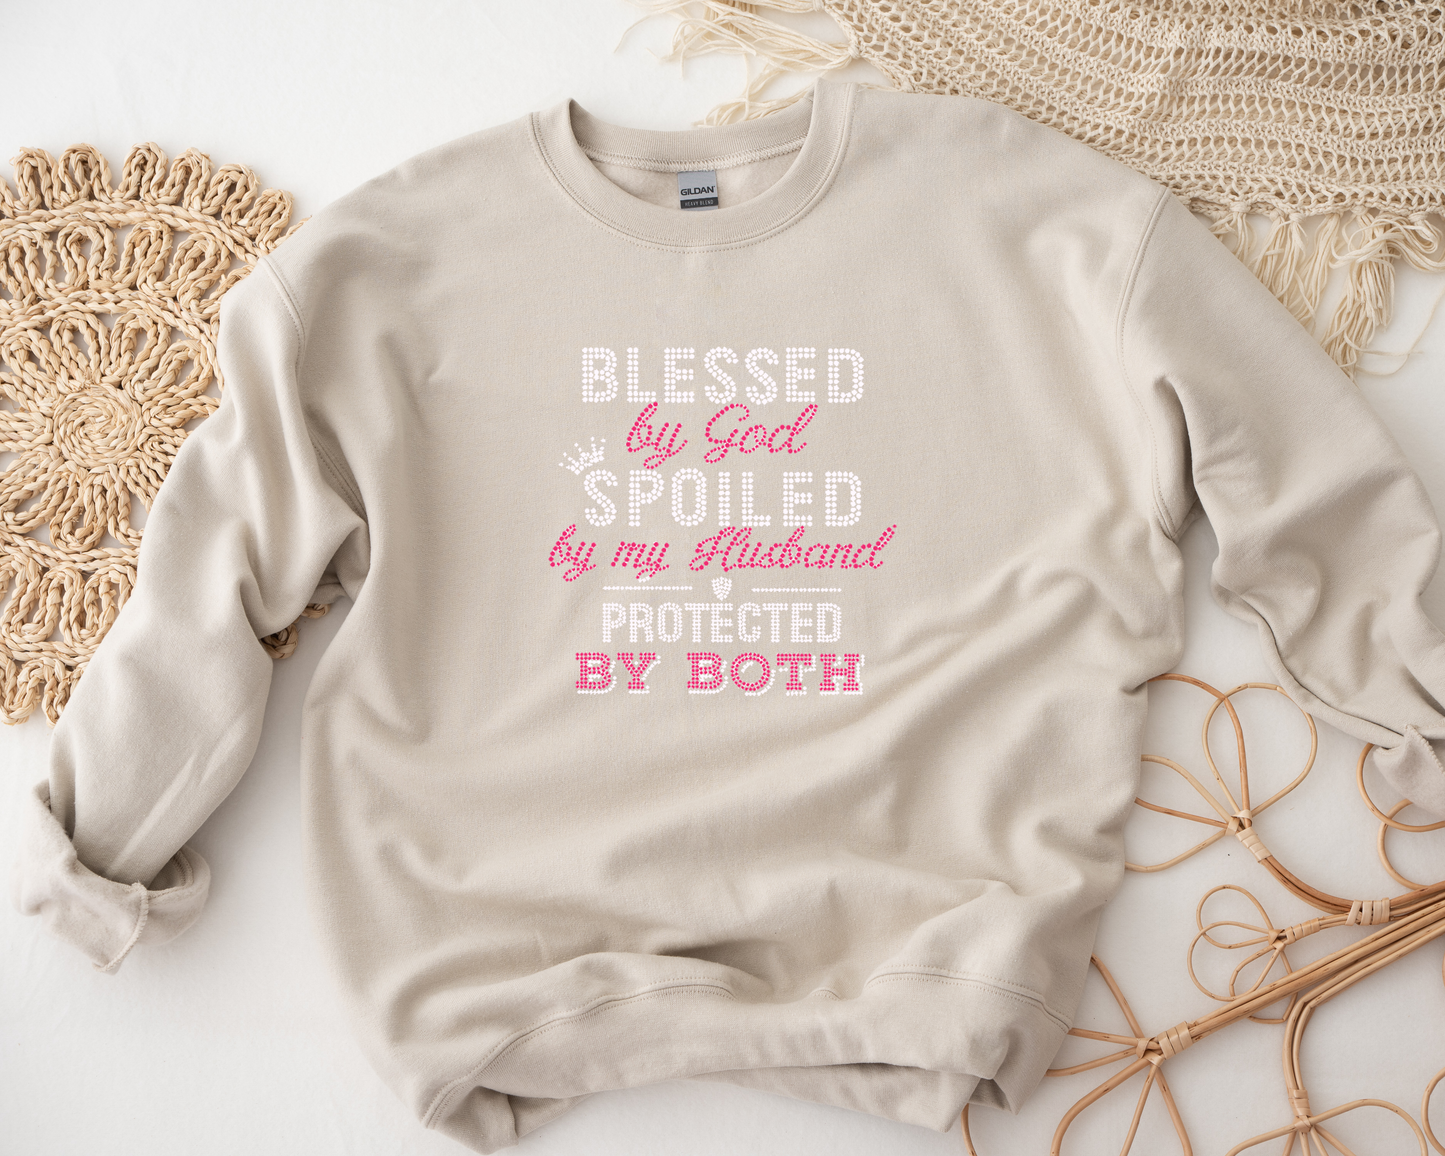 Blessed by God Spoiled by my Husband Rhinestone hoodies/sweatshirts